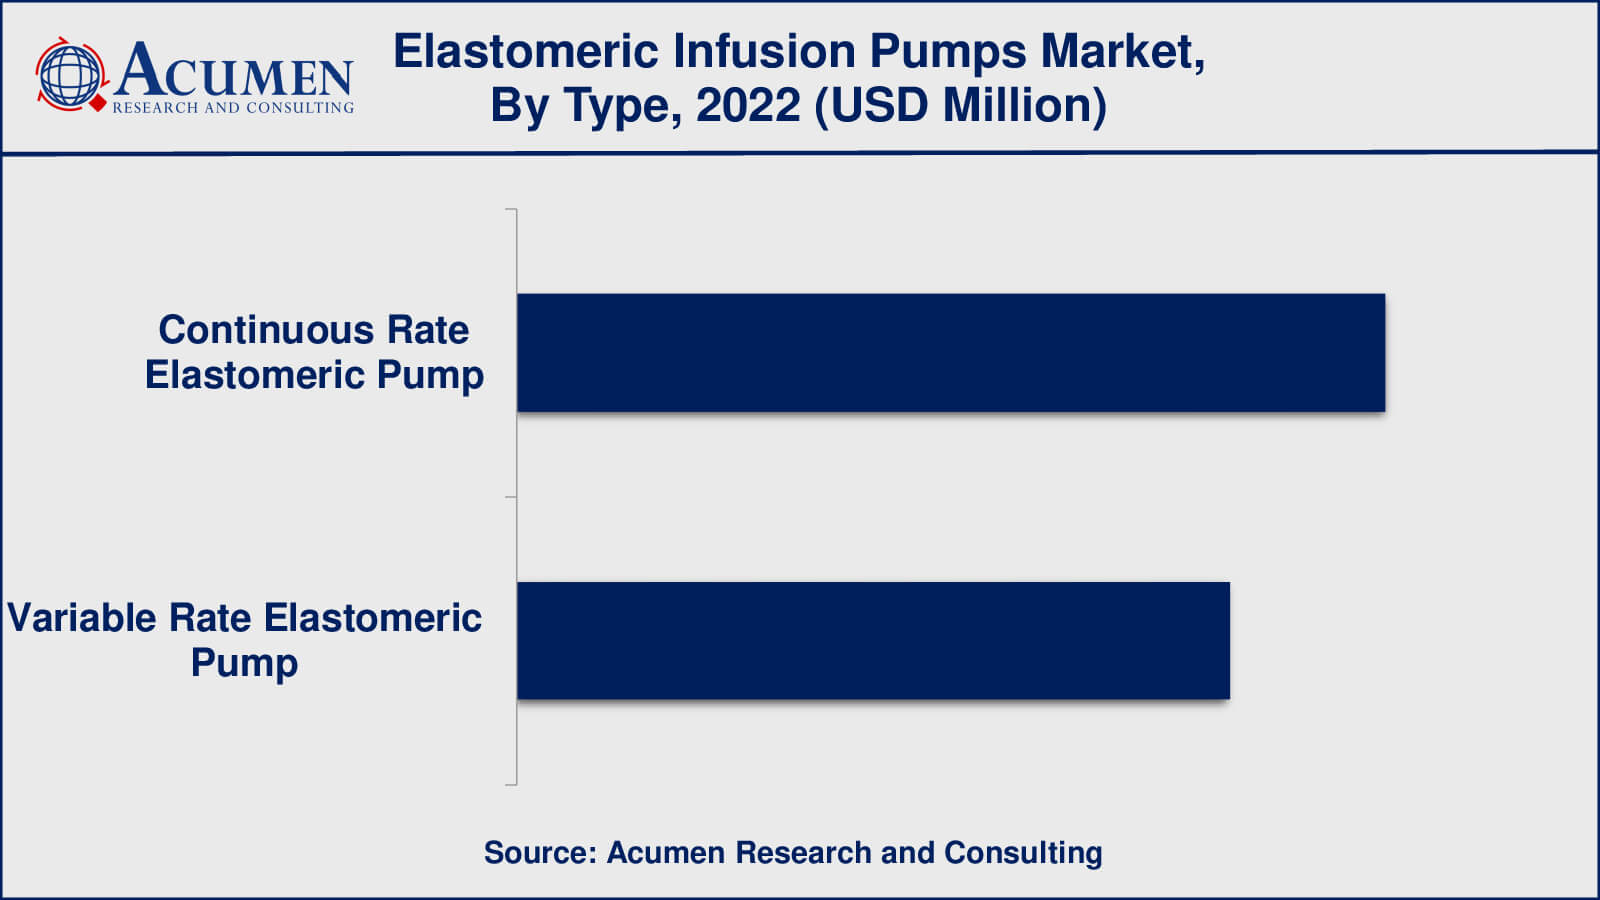 Elastomeric Infusion Pumps Market Insights